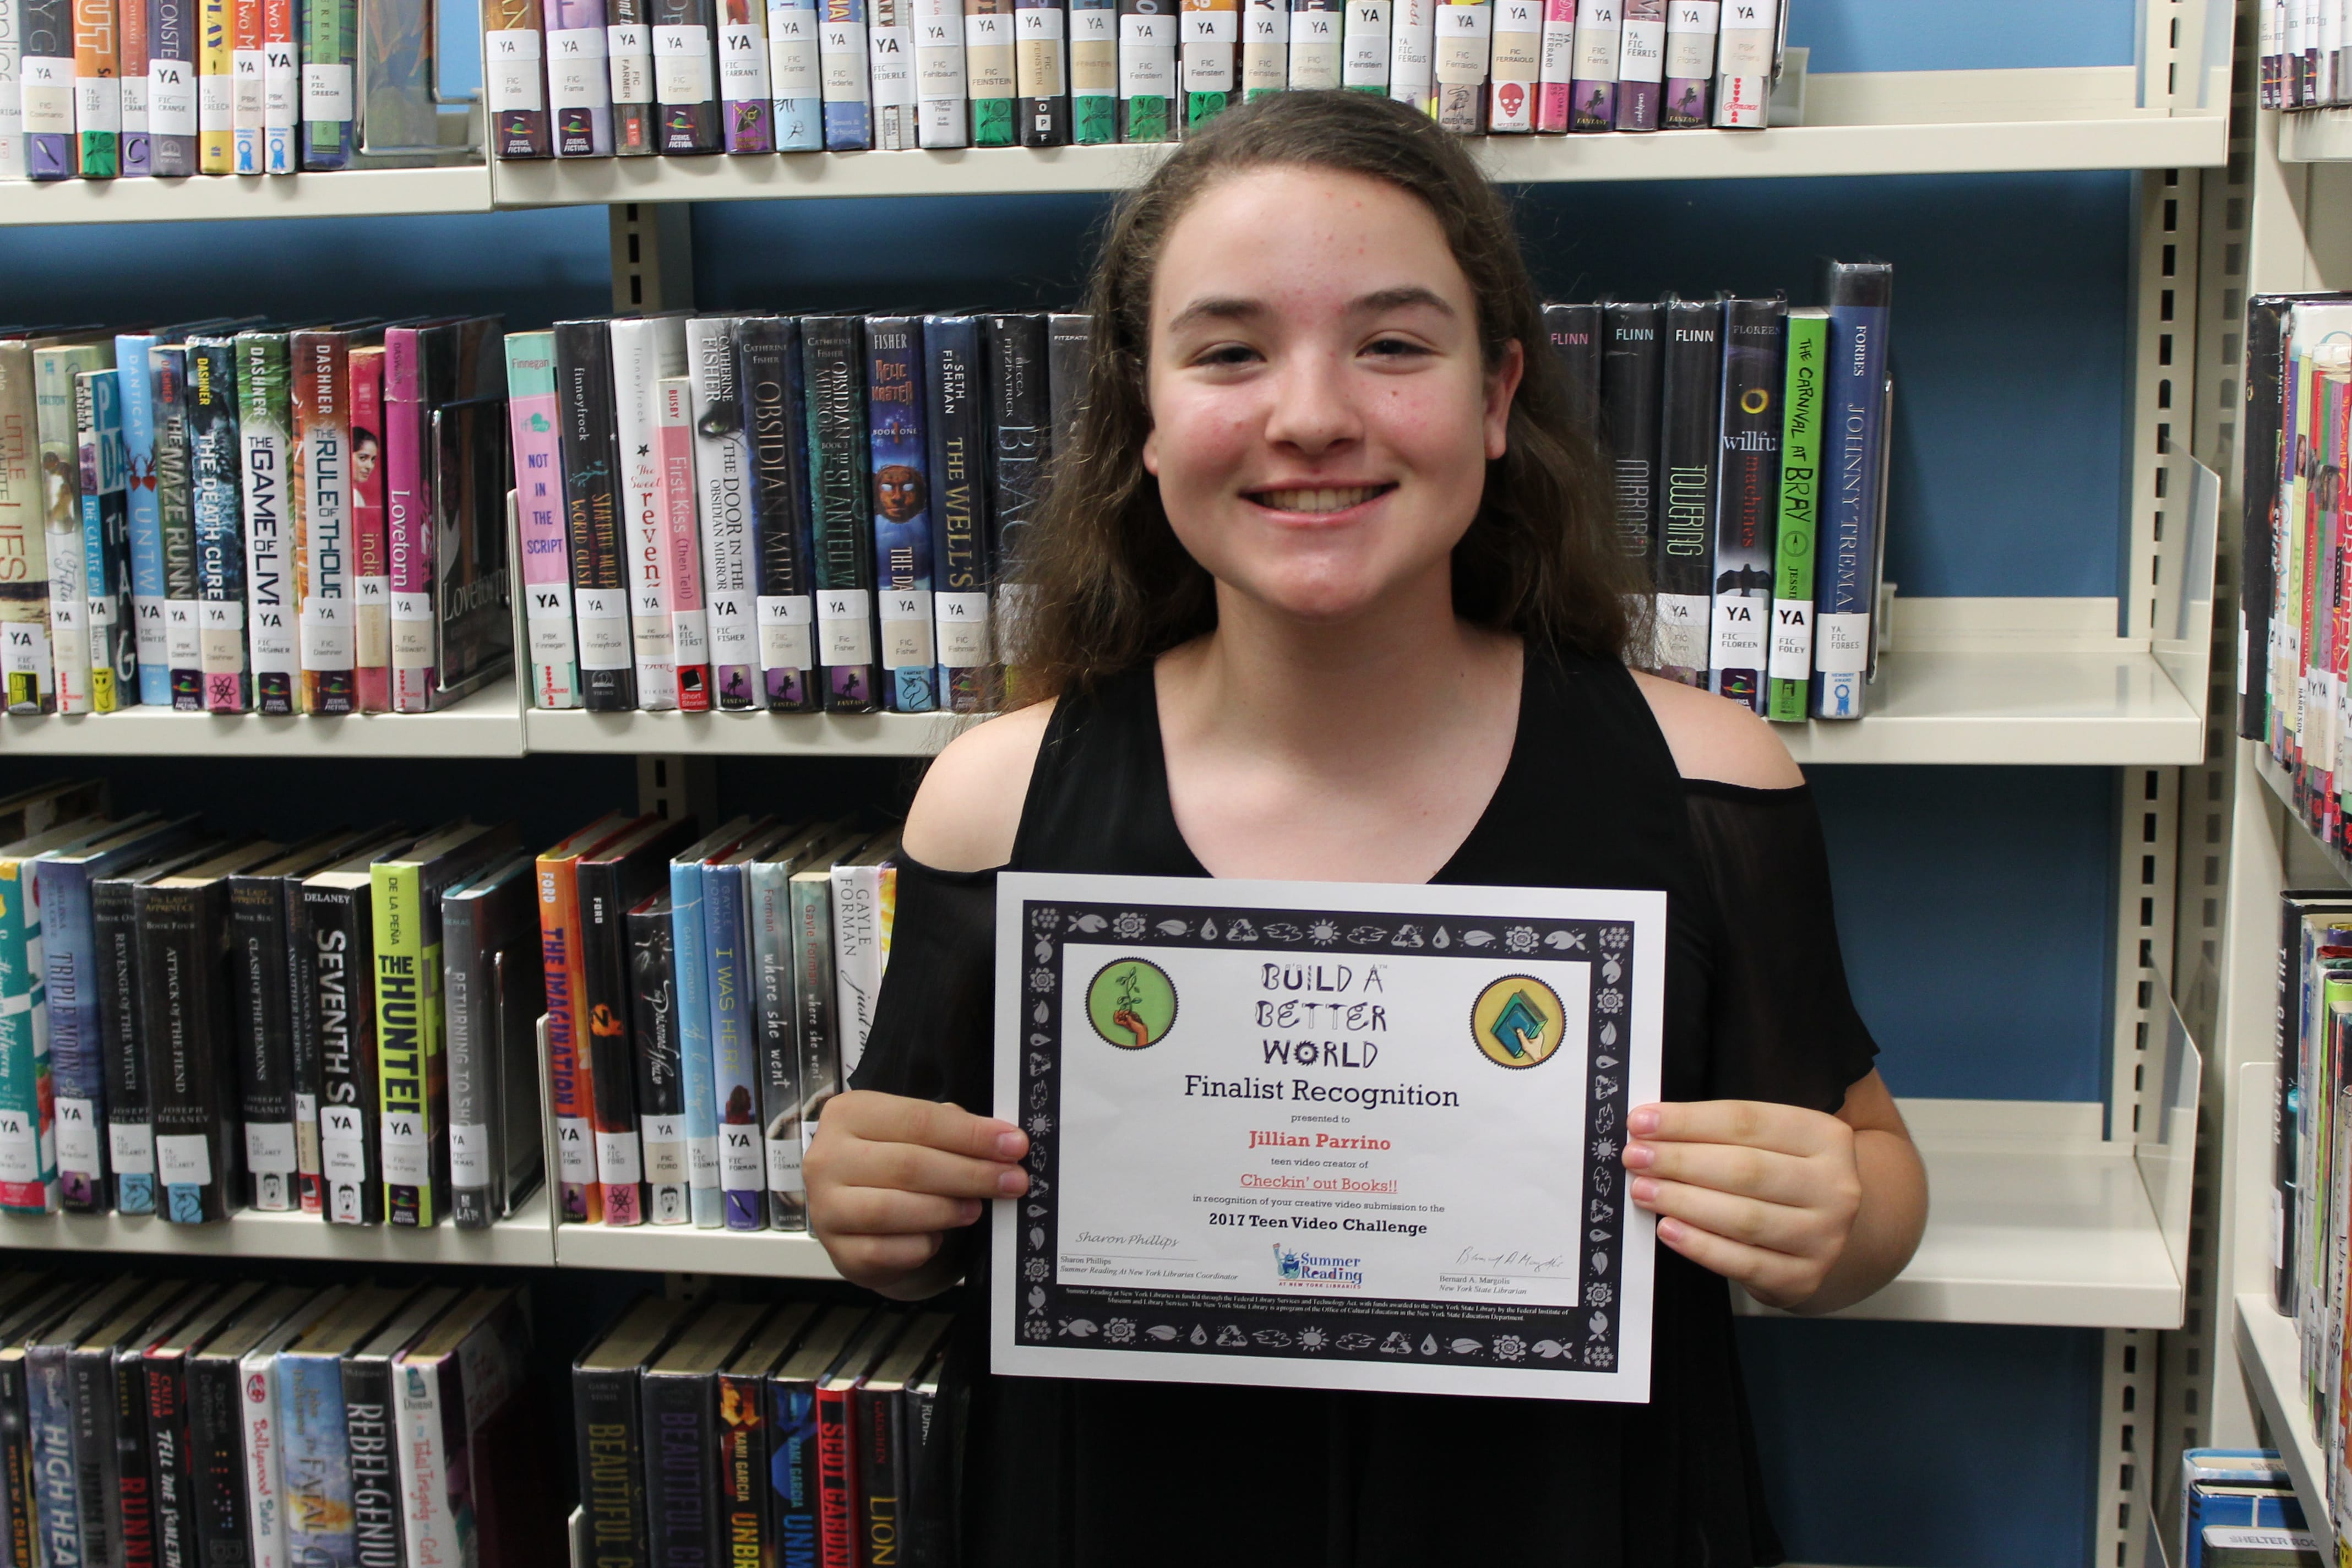 Summer reading video by Albertson teen wins award